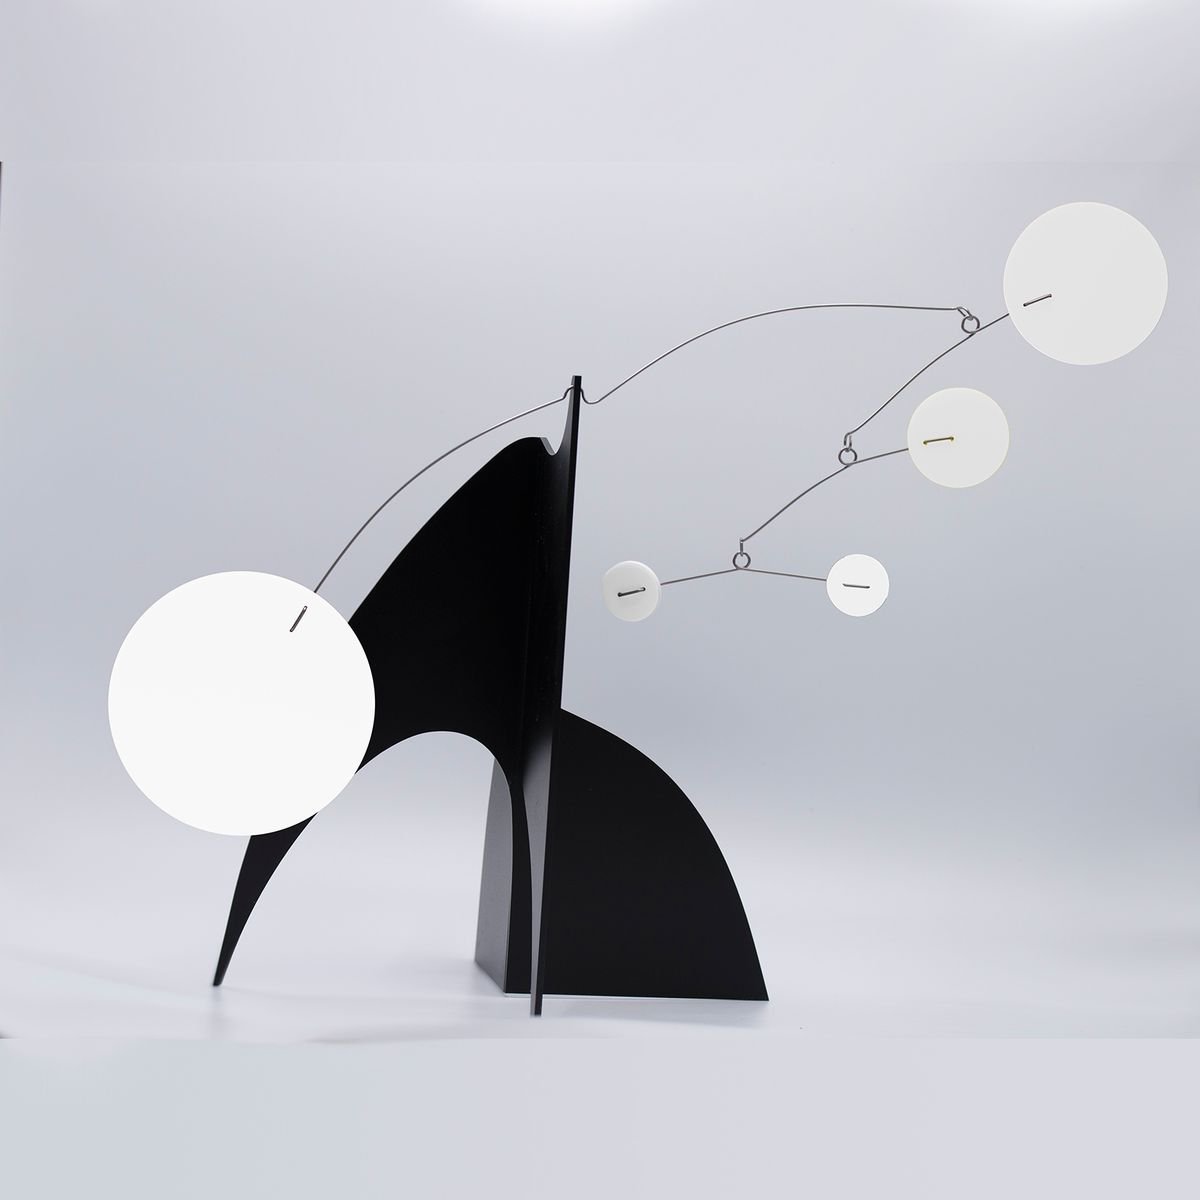 Beautiful Modern Desktop Mobile (Stabile) Sculpture by Atomic Mobiles - Retro Midcentury S... by Debra Ann